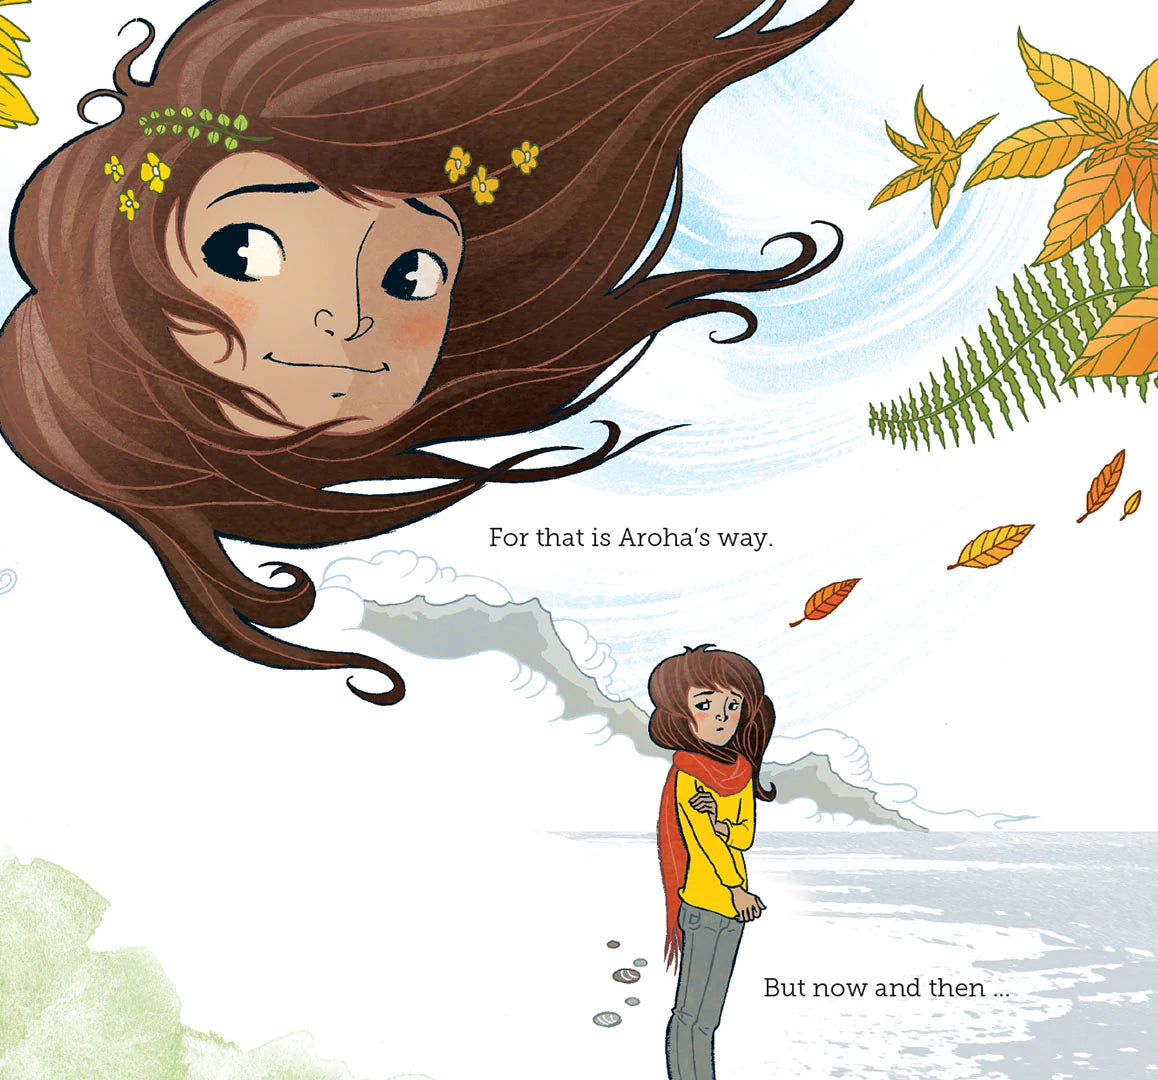 Book: Aroha's Way - A children's guide through emotions